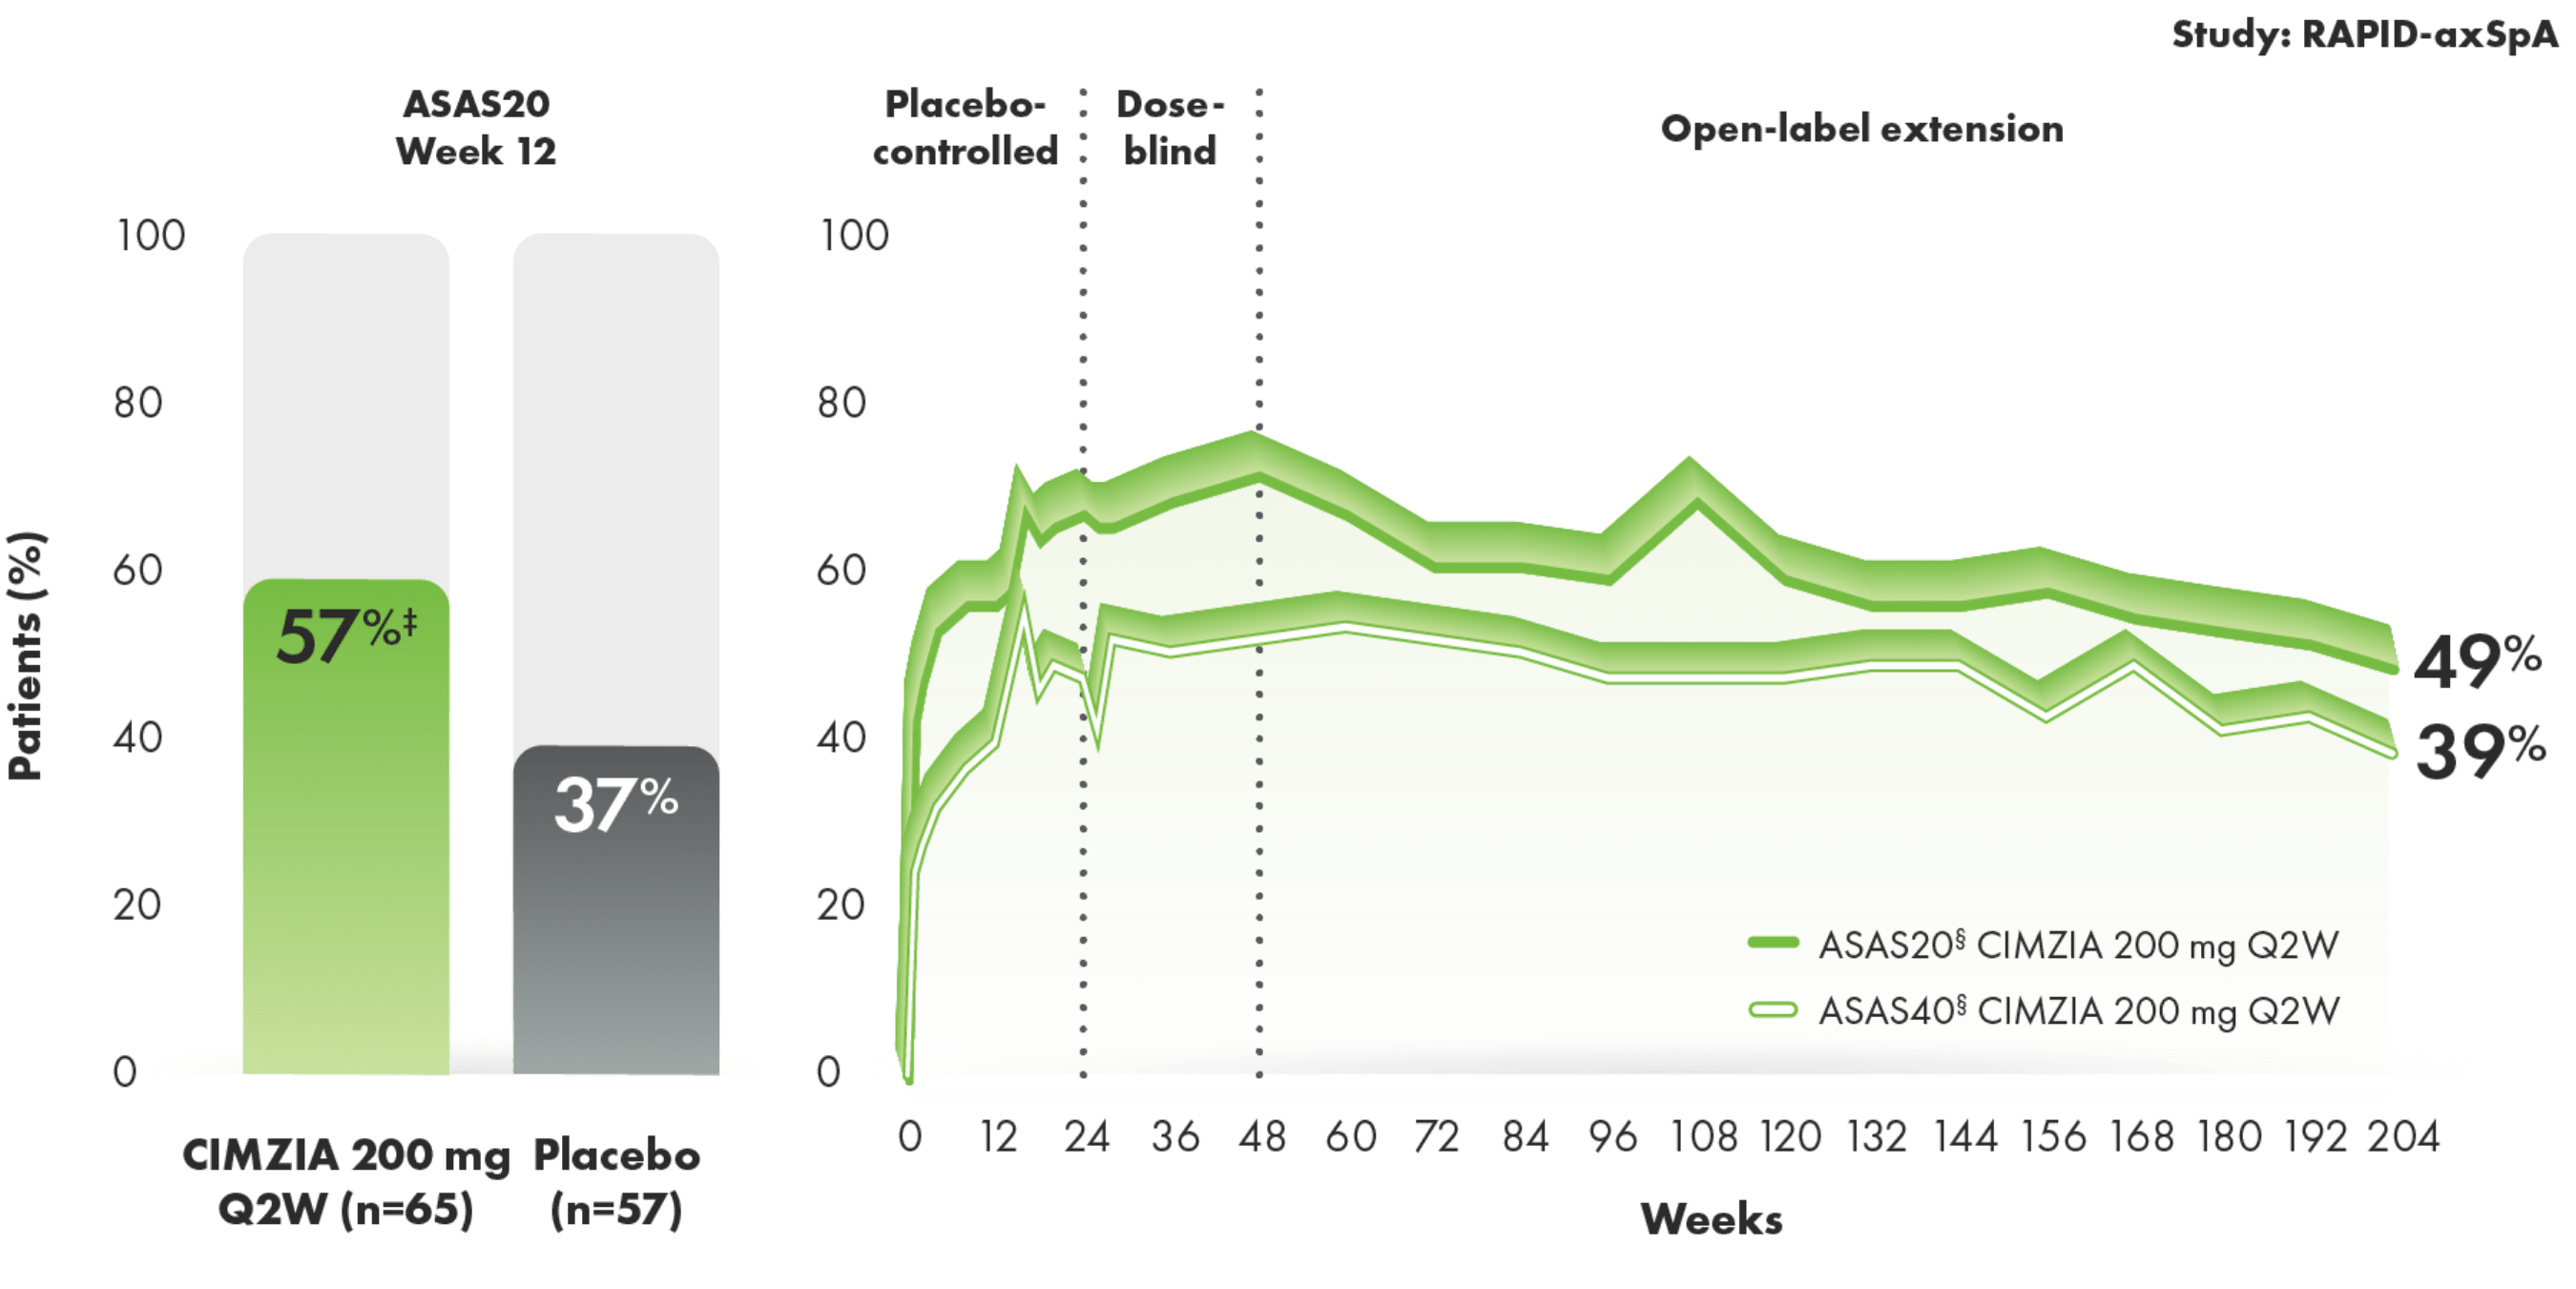 AS_ASAS20 40 response rates in an AS subpopulation through year 4